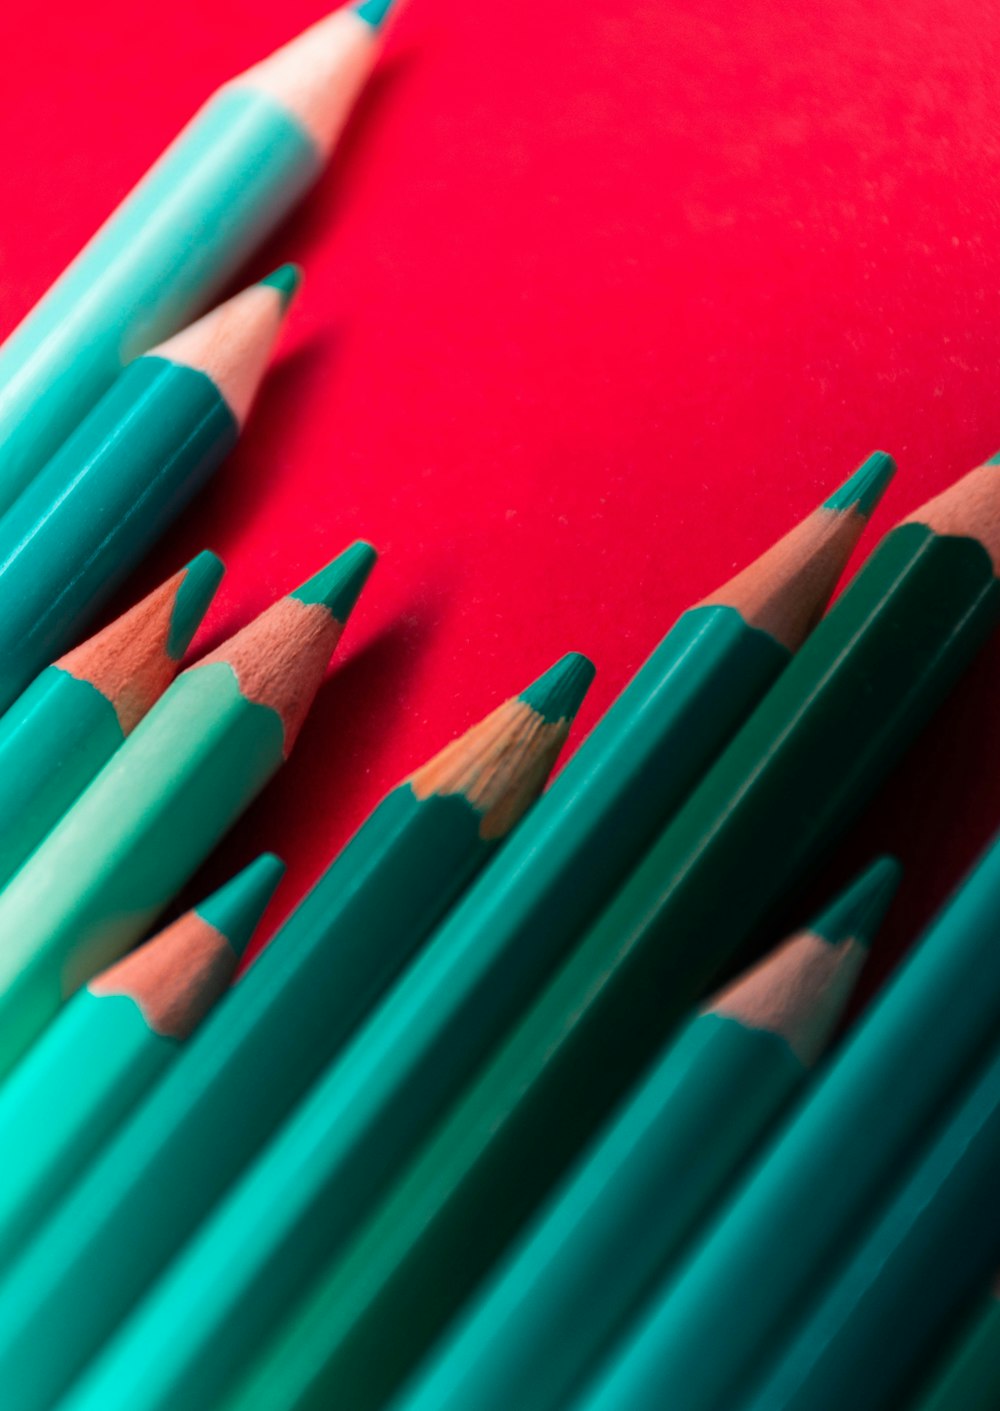 matite colorate rosse e verdi